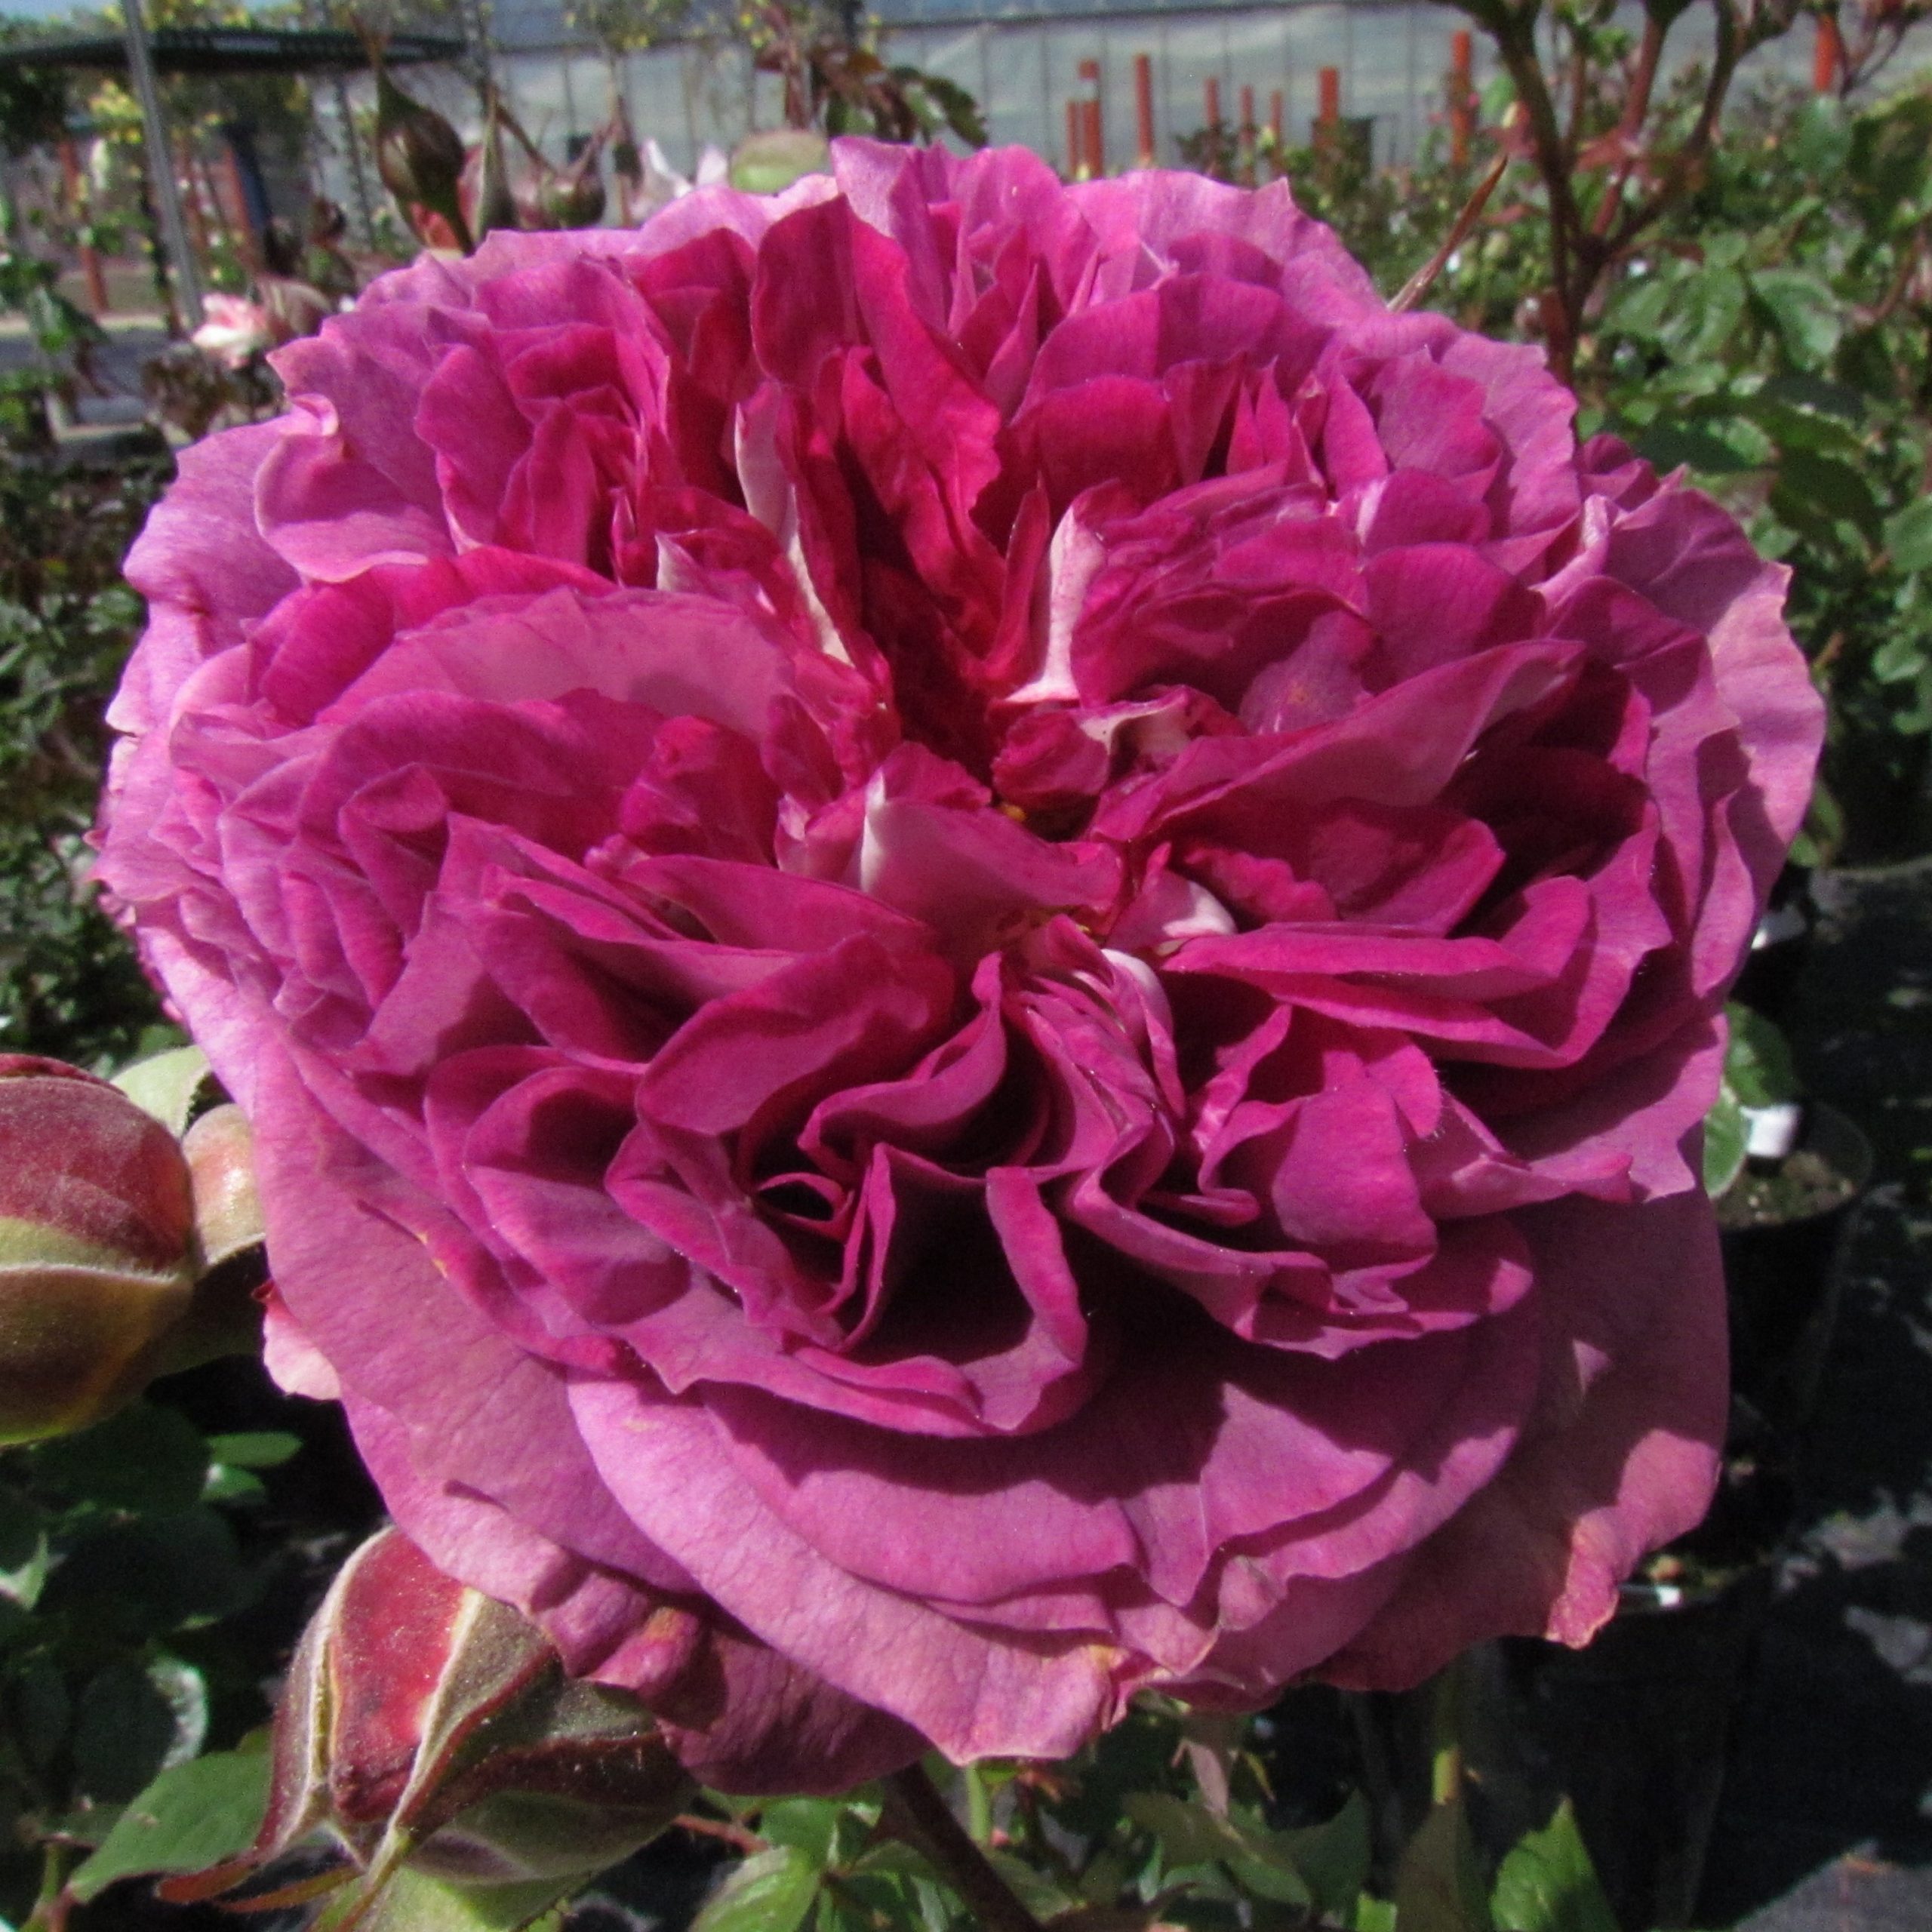 Our Special Girl Rose % purple floribundaStyle Roses